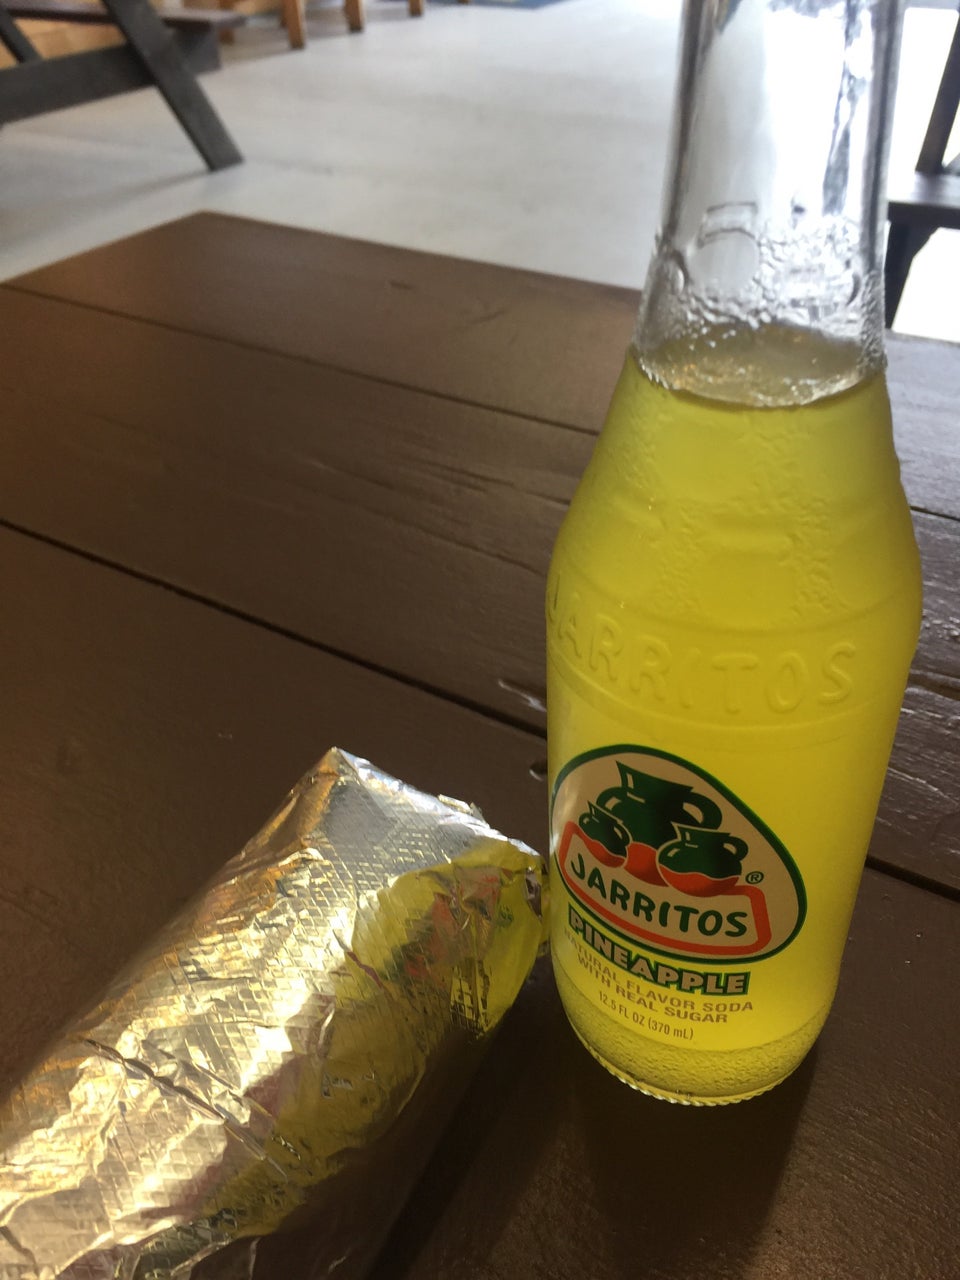 Photo of Big Daddy's Burritos